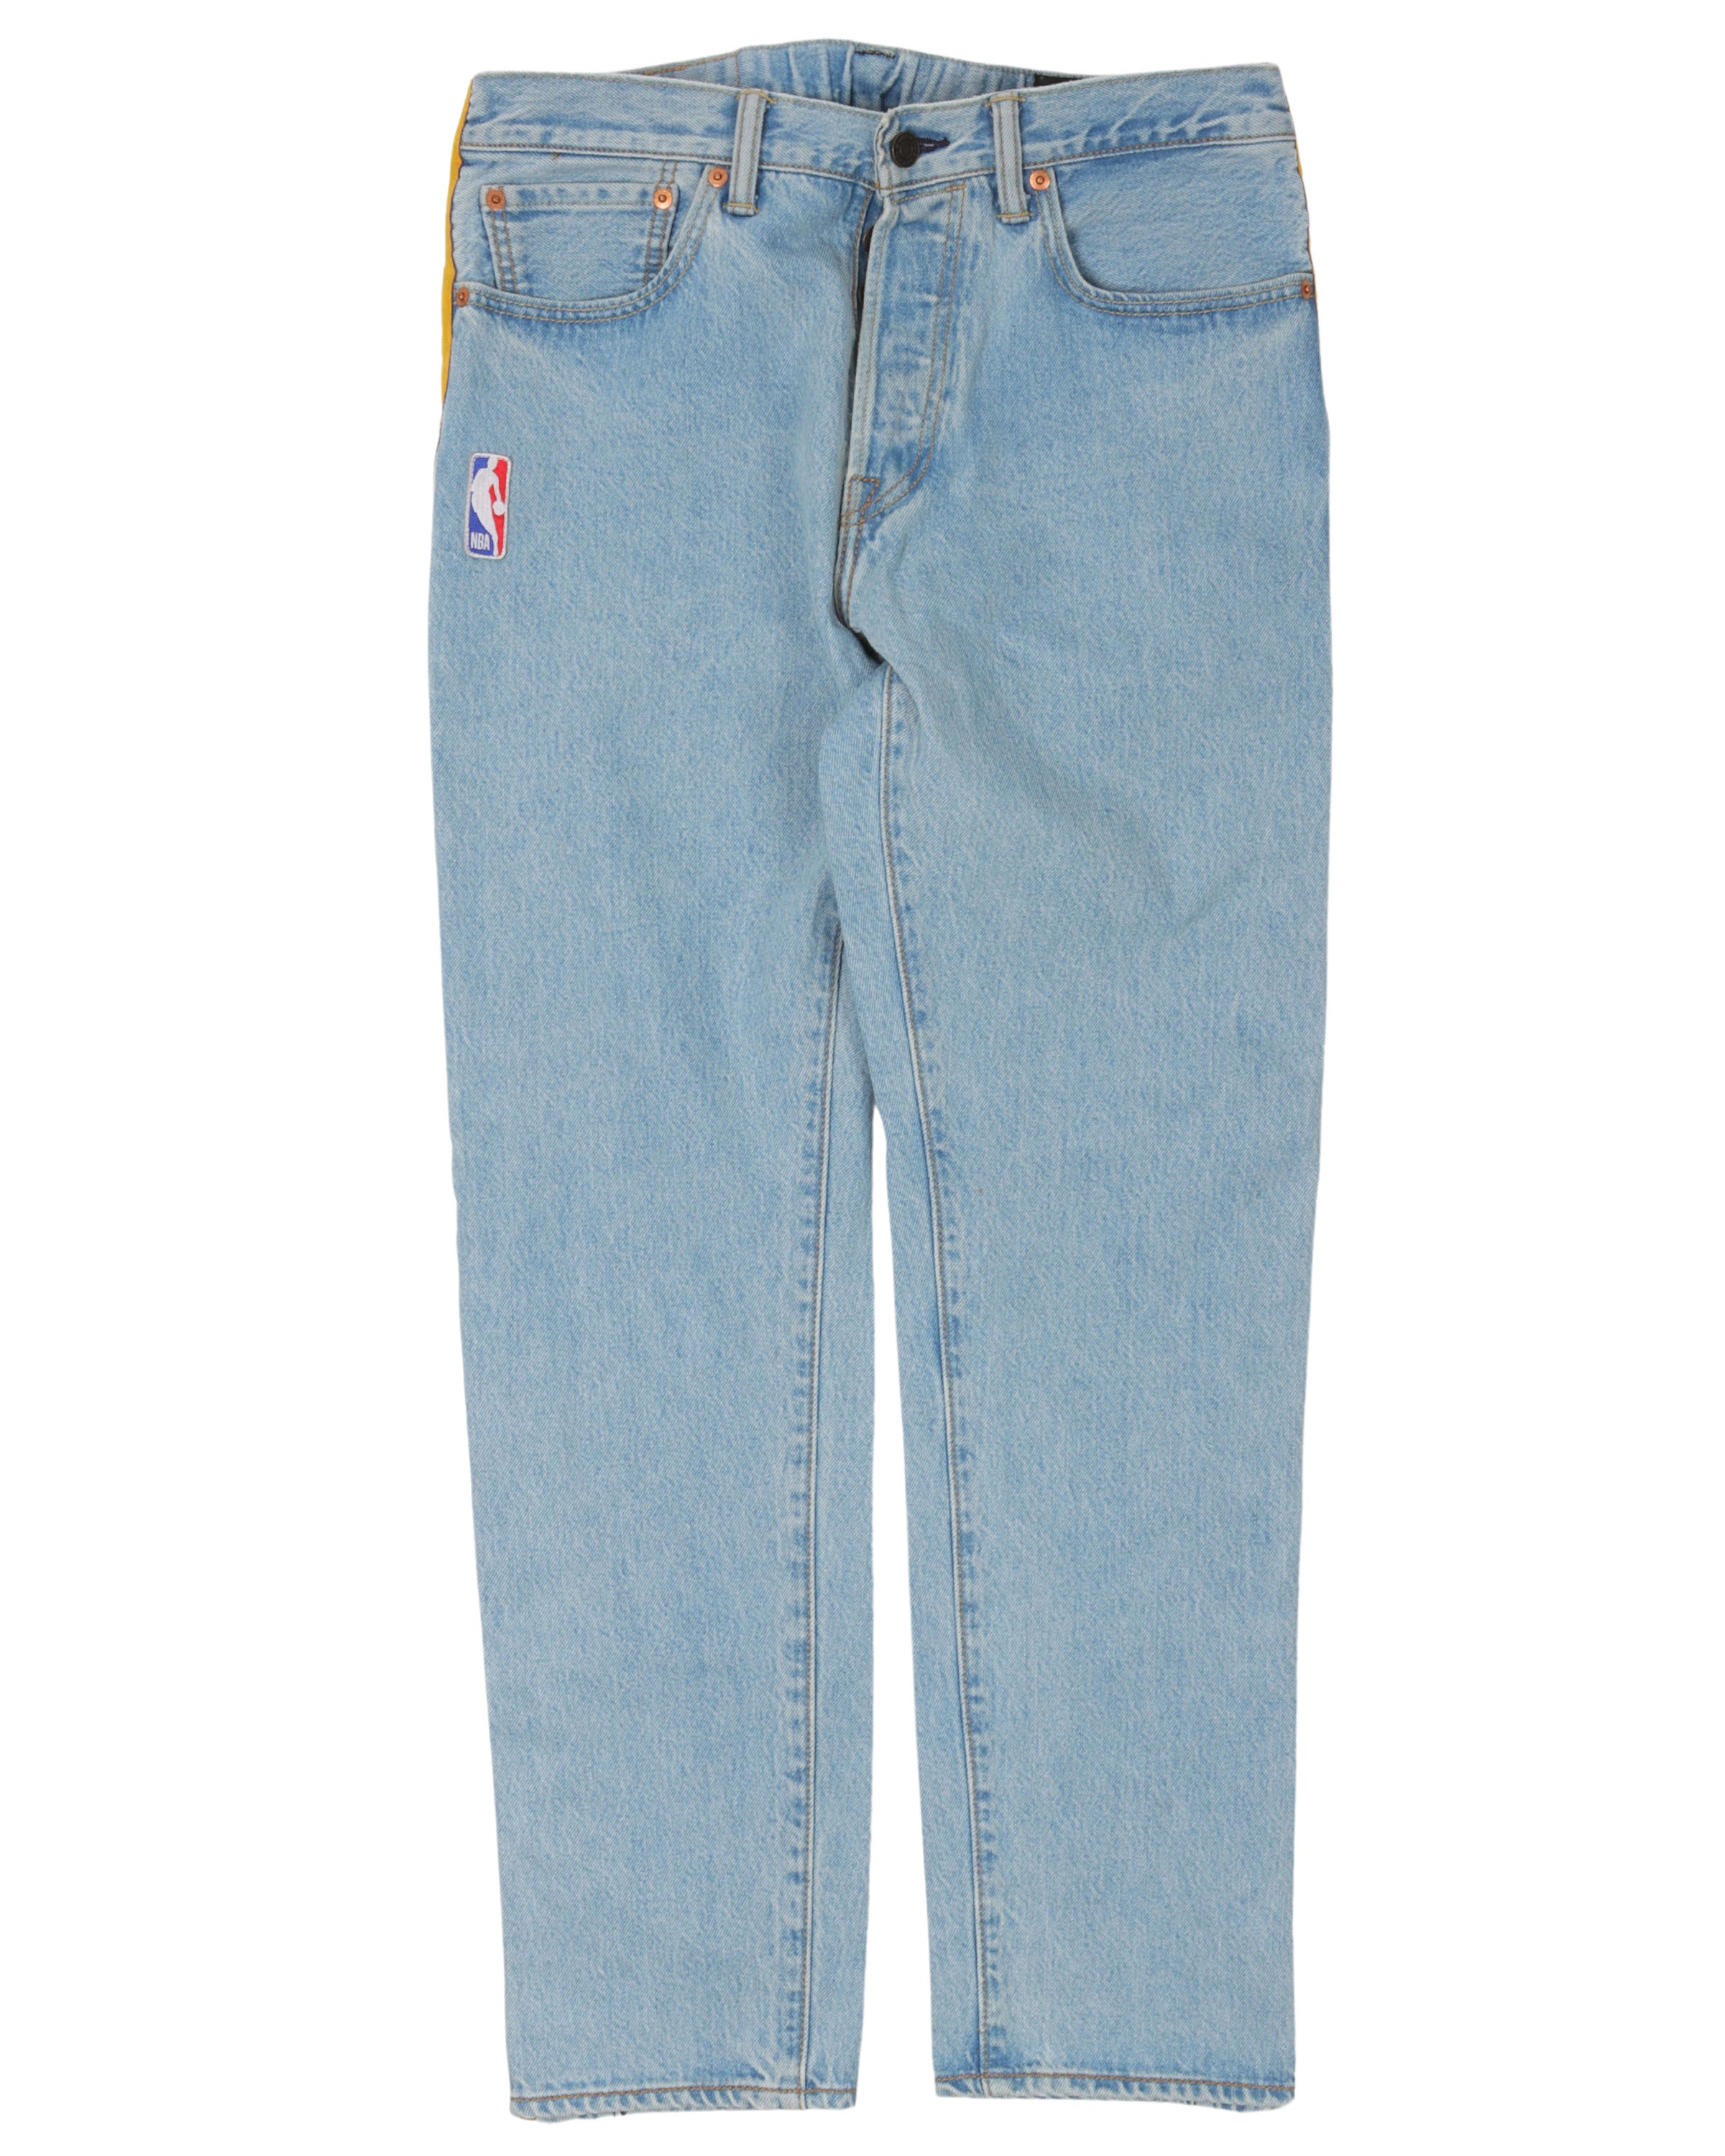 NBA Tearaway Levi's Jeans